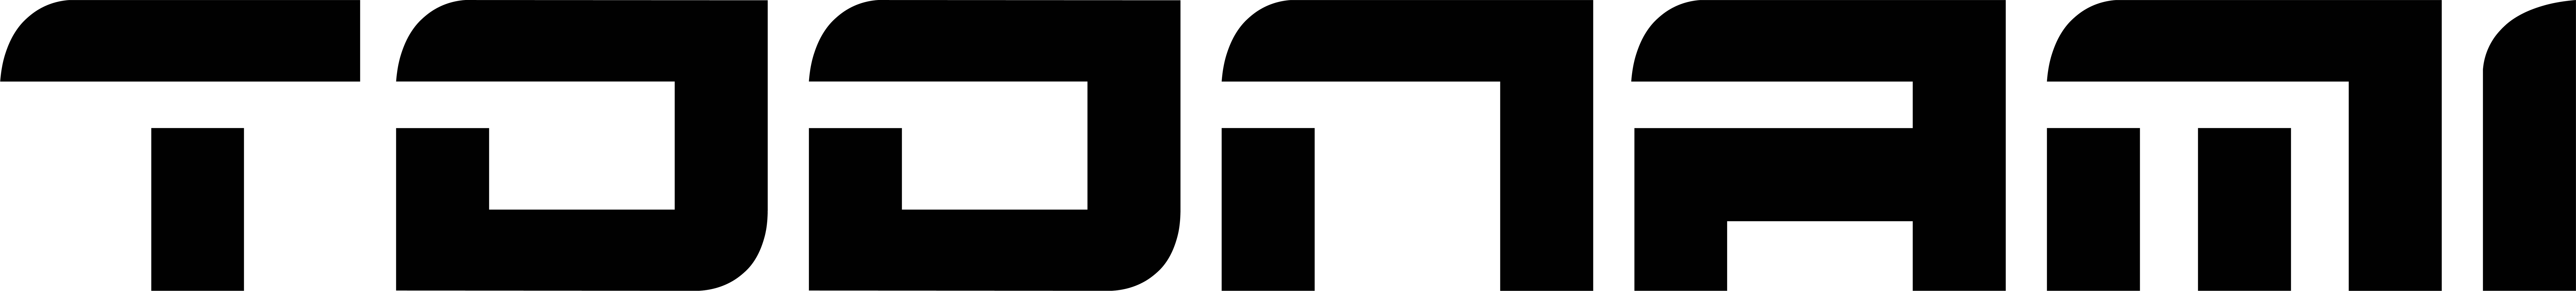 File:Toonami logo 2013.png.